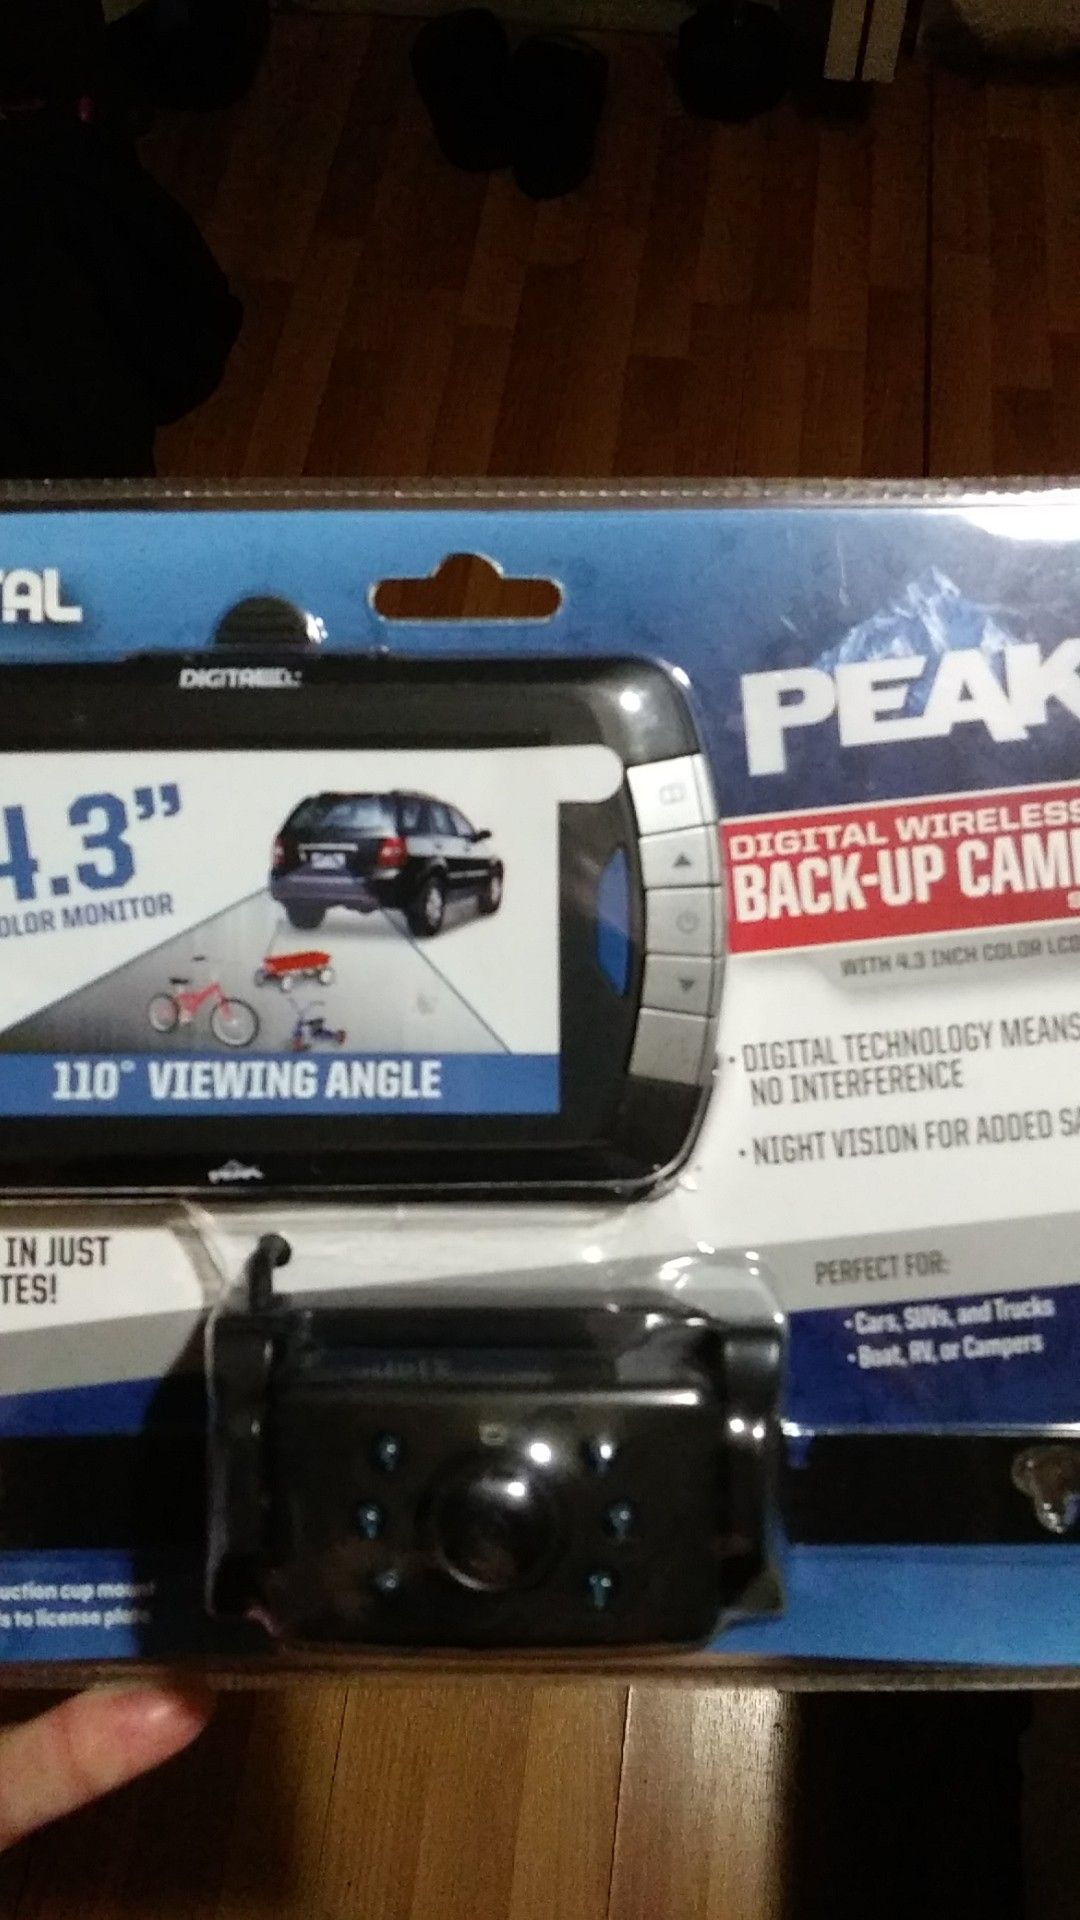 PEAK Digital Wireless Back-up camera